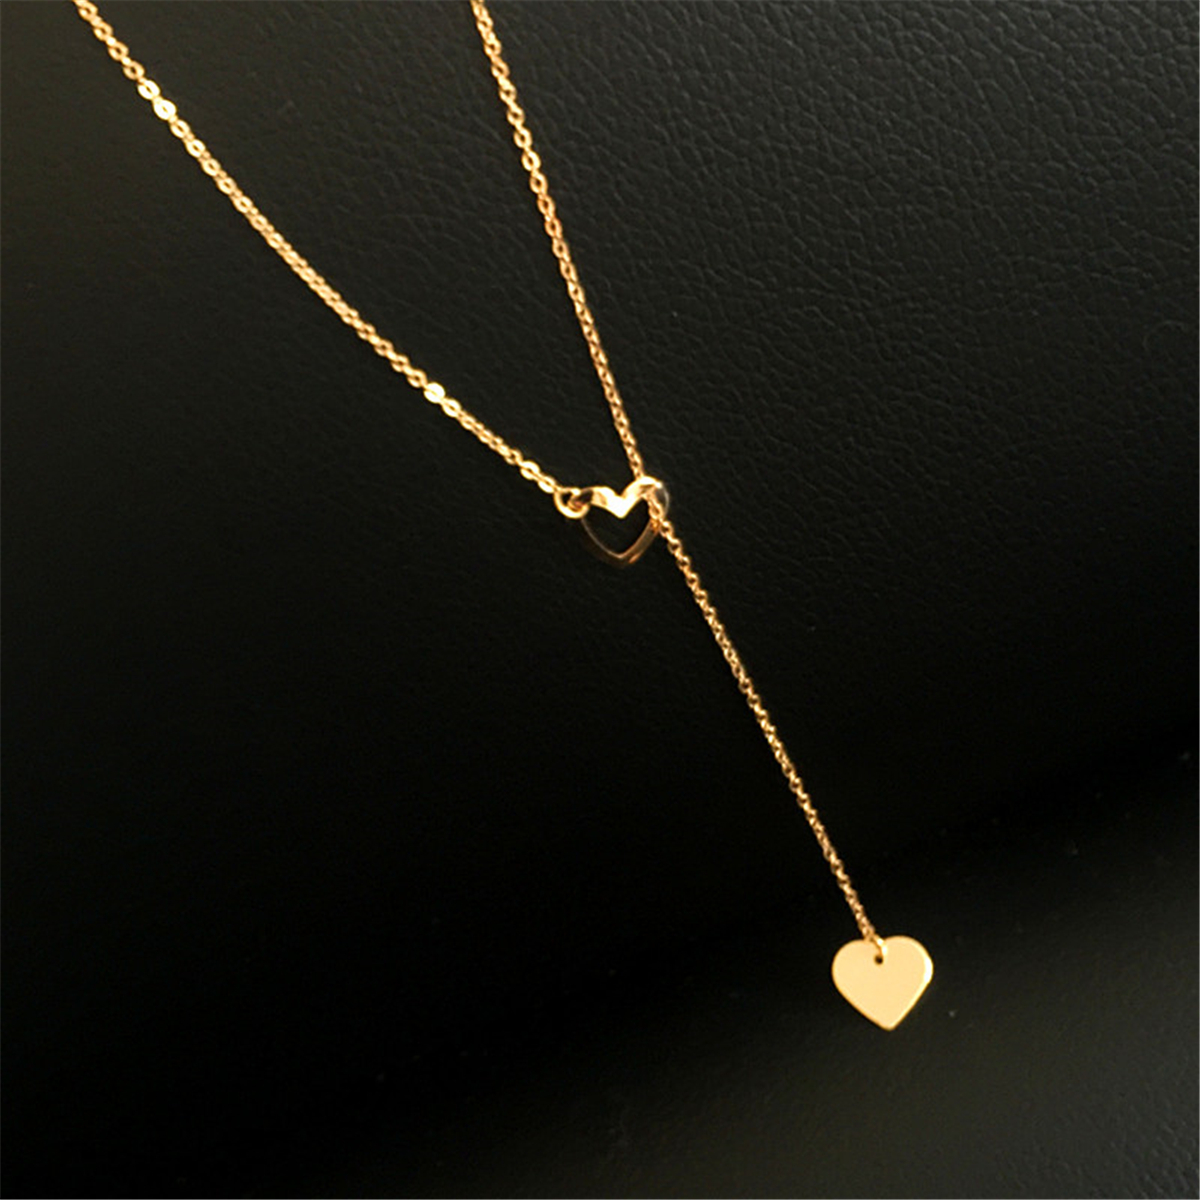 bbb2ac00 0335 42b4 b11d 731a6dd3816c - Simple Handmade Copper Love Temperament Pendant Adjustable Fashion Necklace